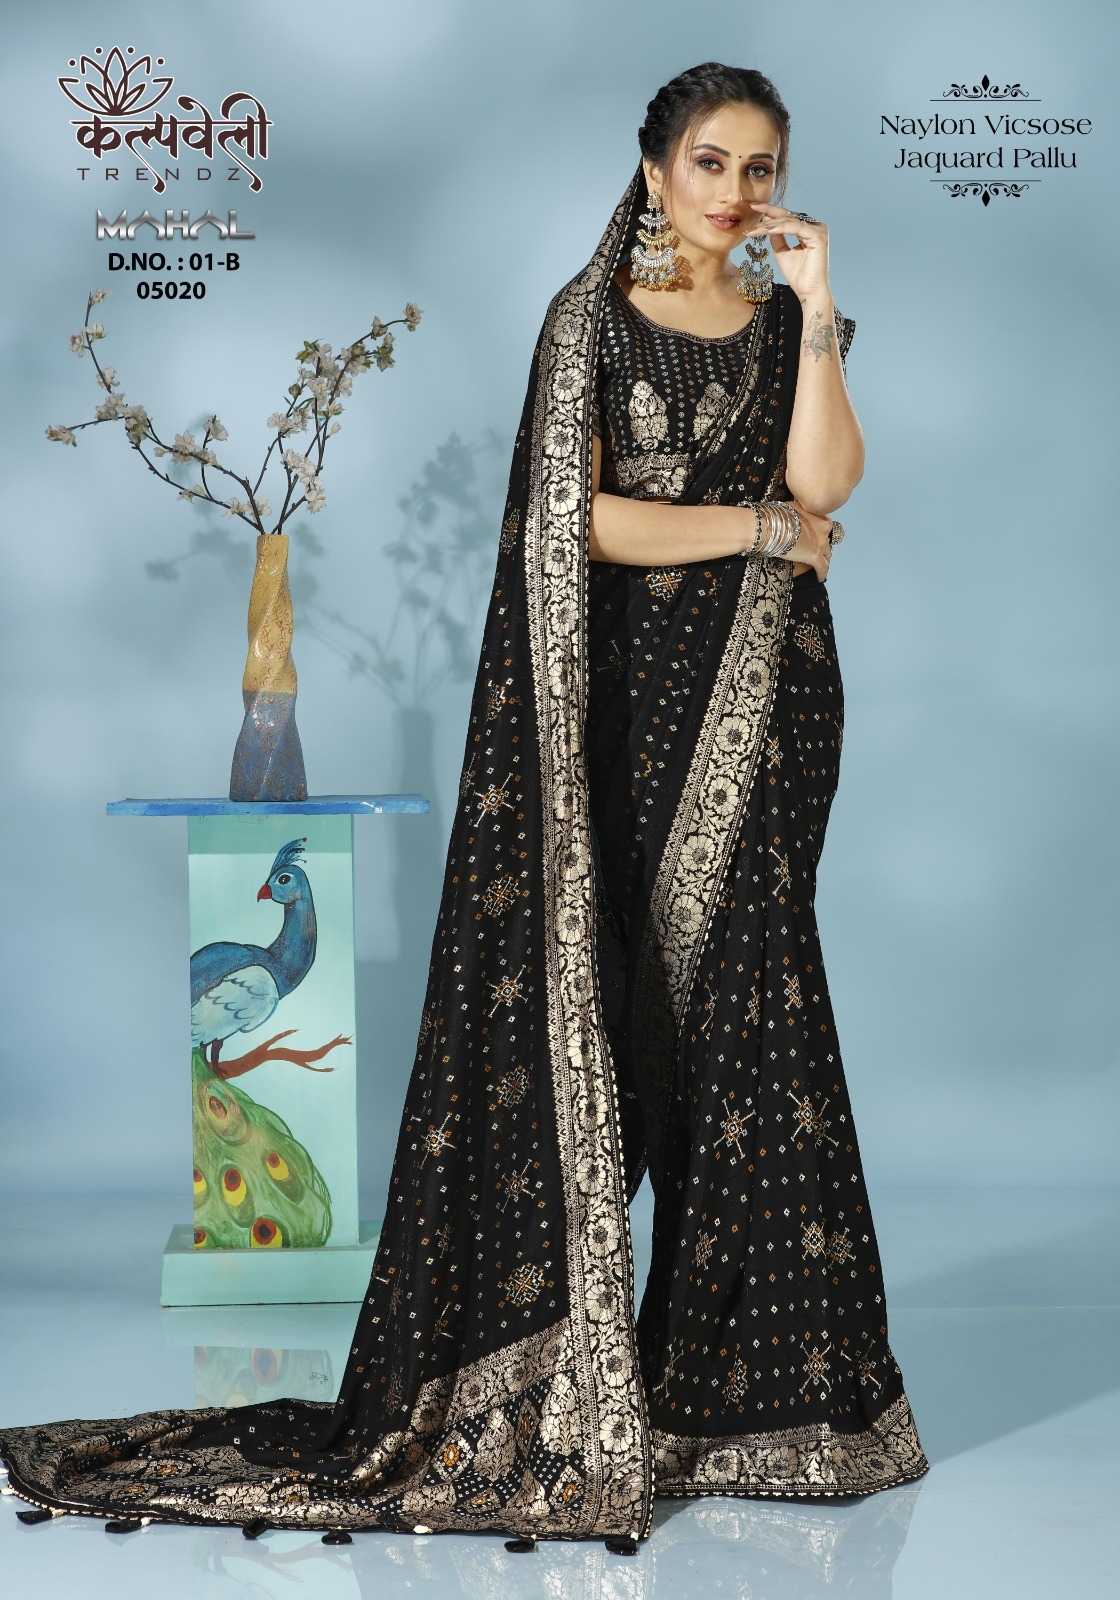 kalpavelly trendz mahal 01 amazing festive wear sarees